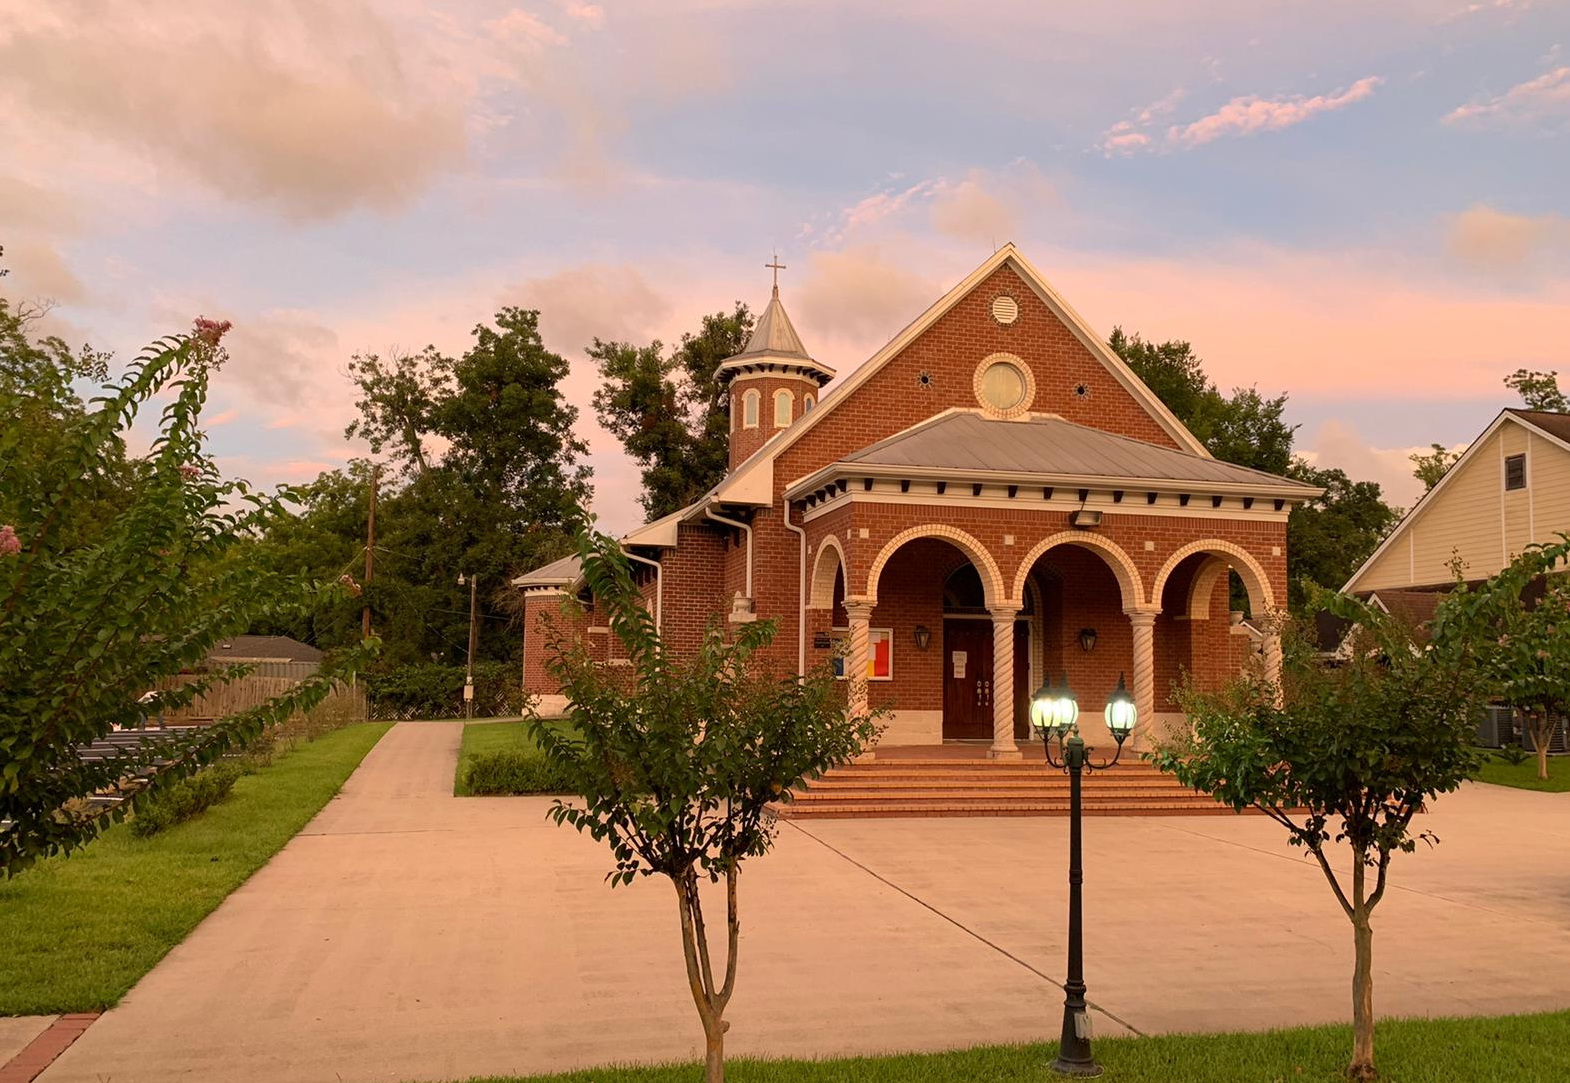 IMG 20200724 WA0026 1 - St. Mary Magdalene Romanian Orthodox Church - Houston